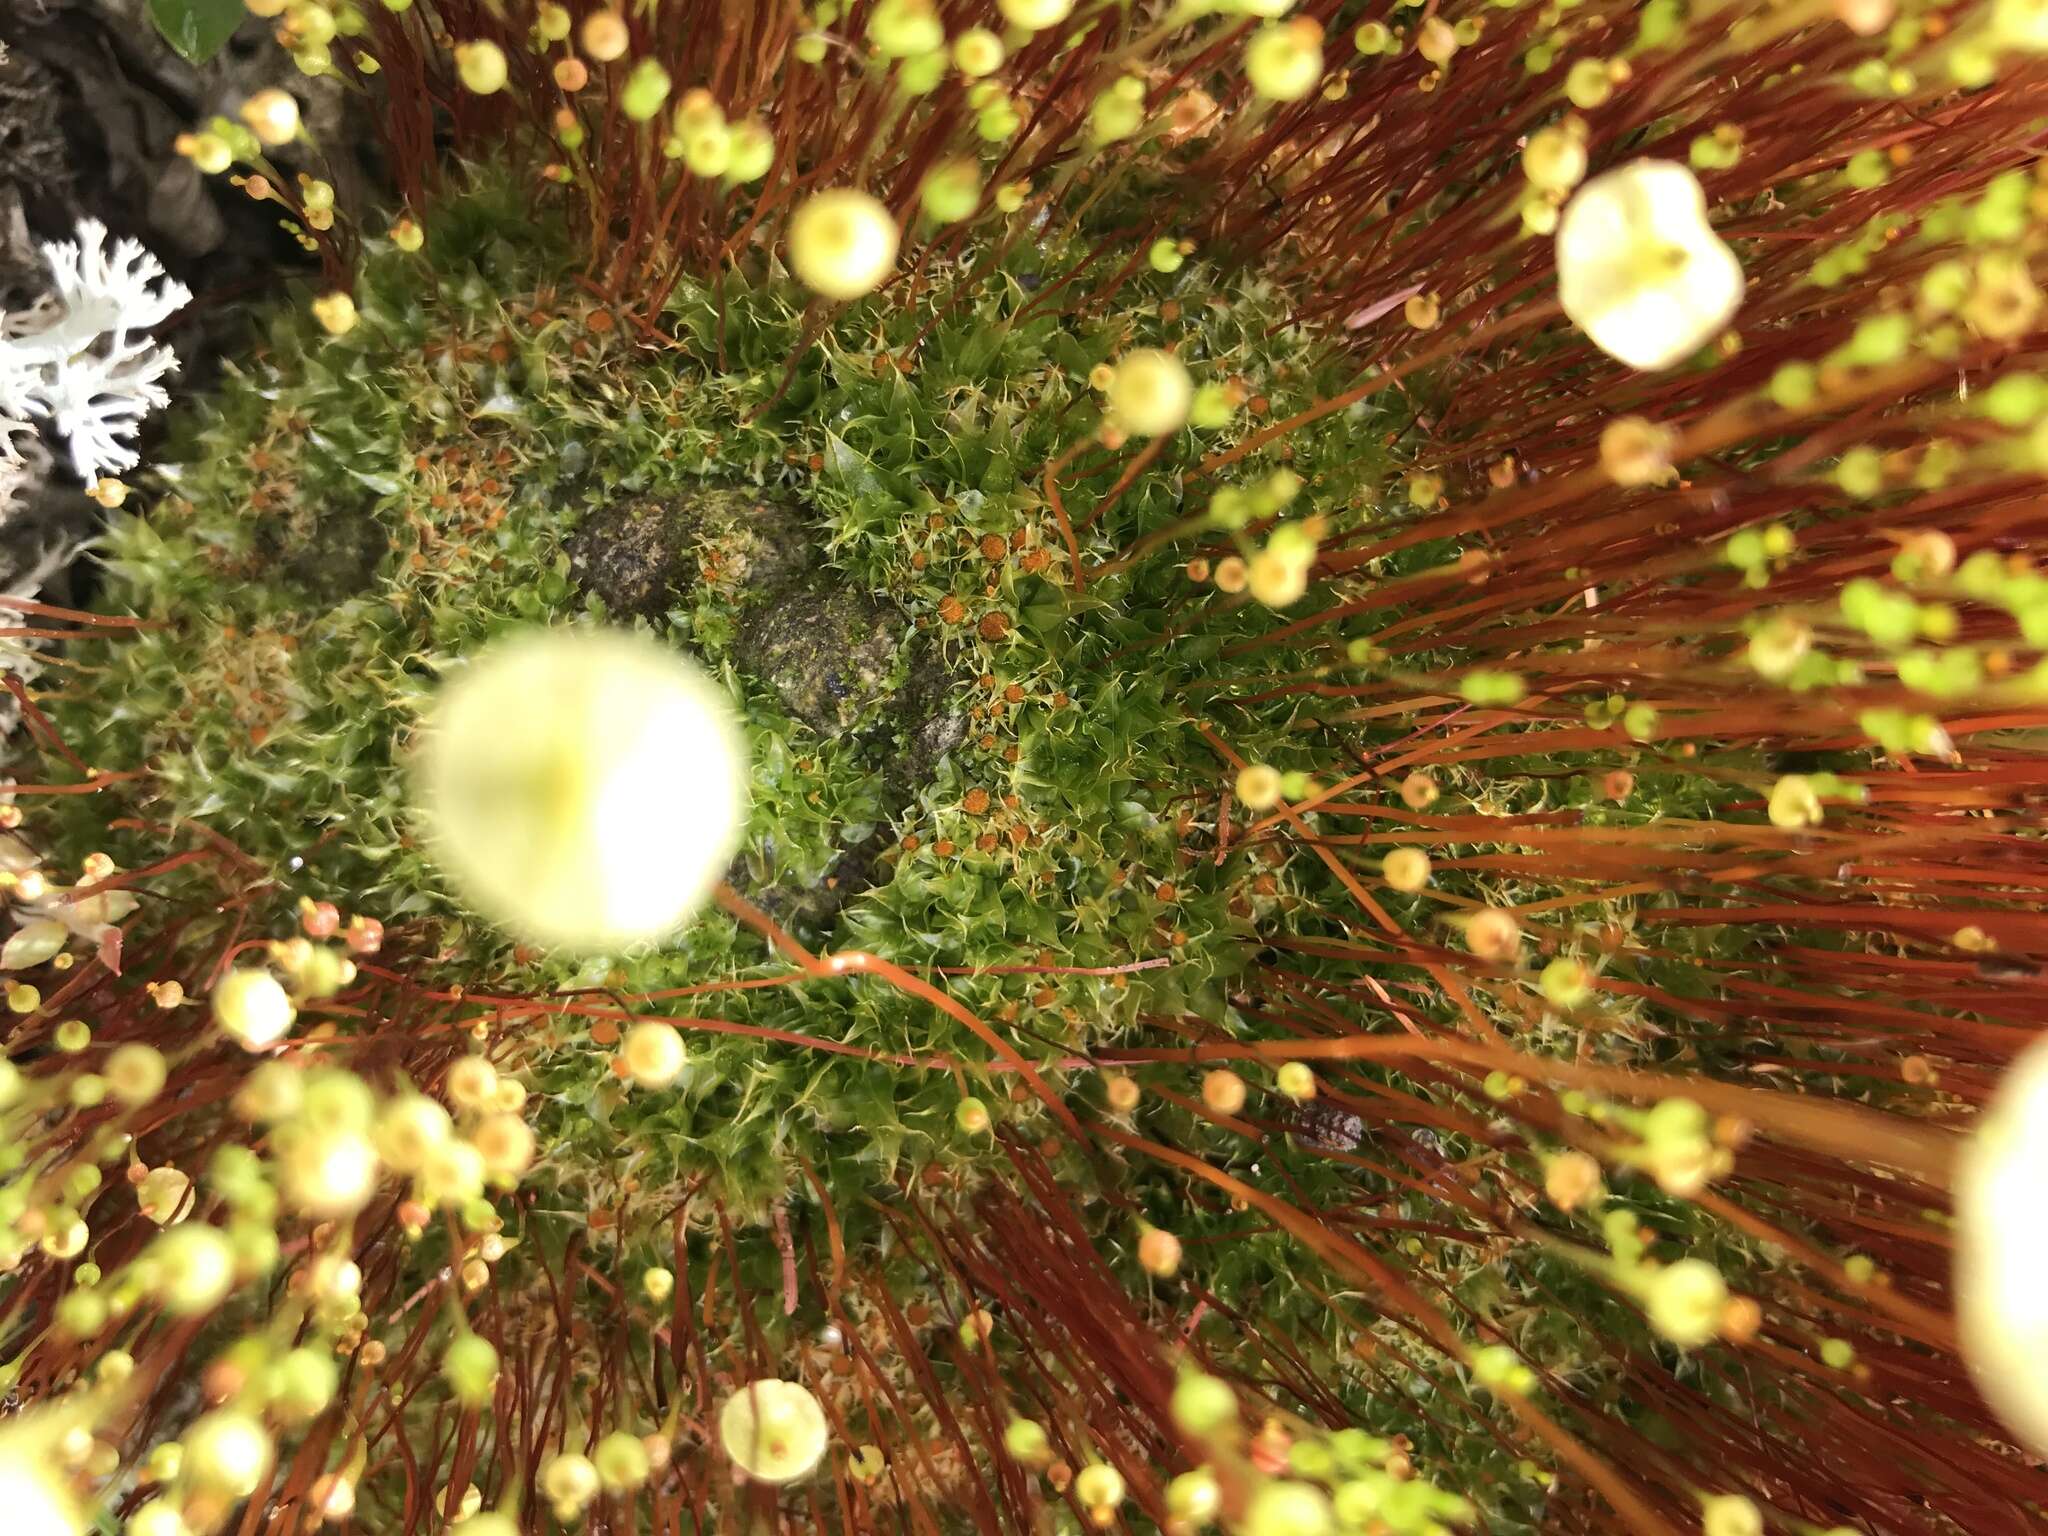 Image of yellow moosedung moss